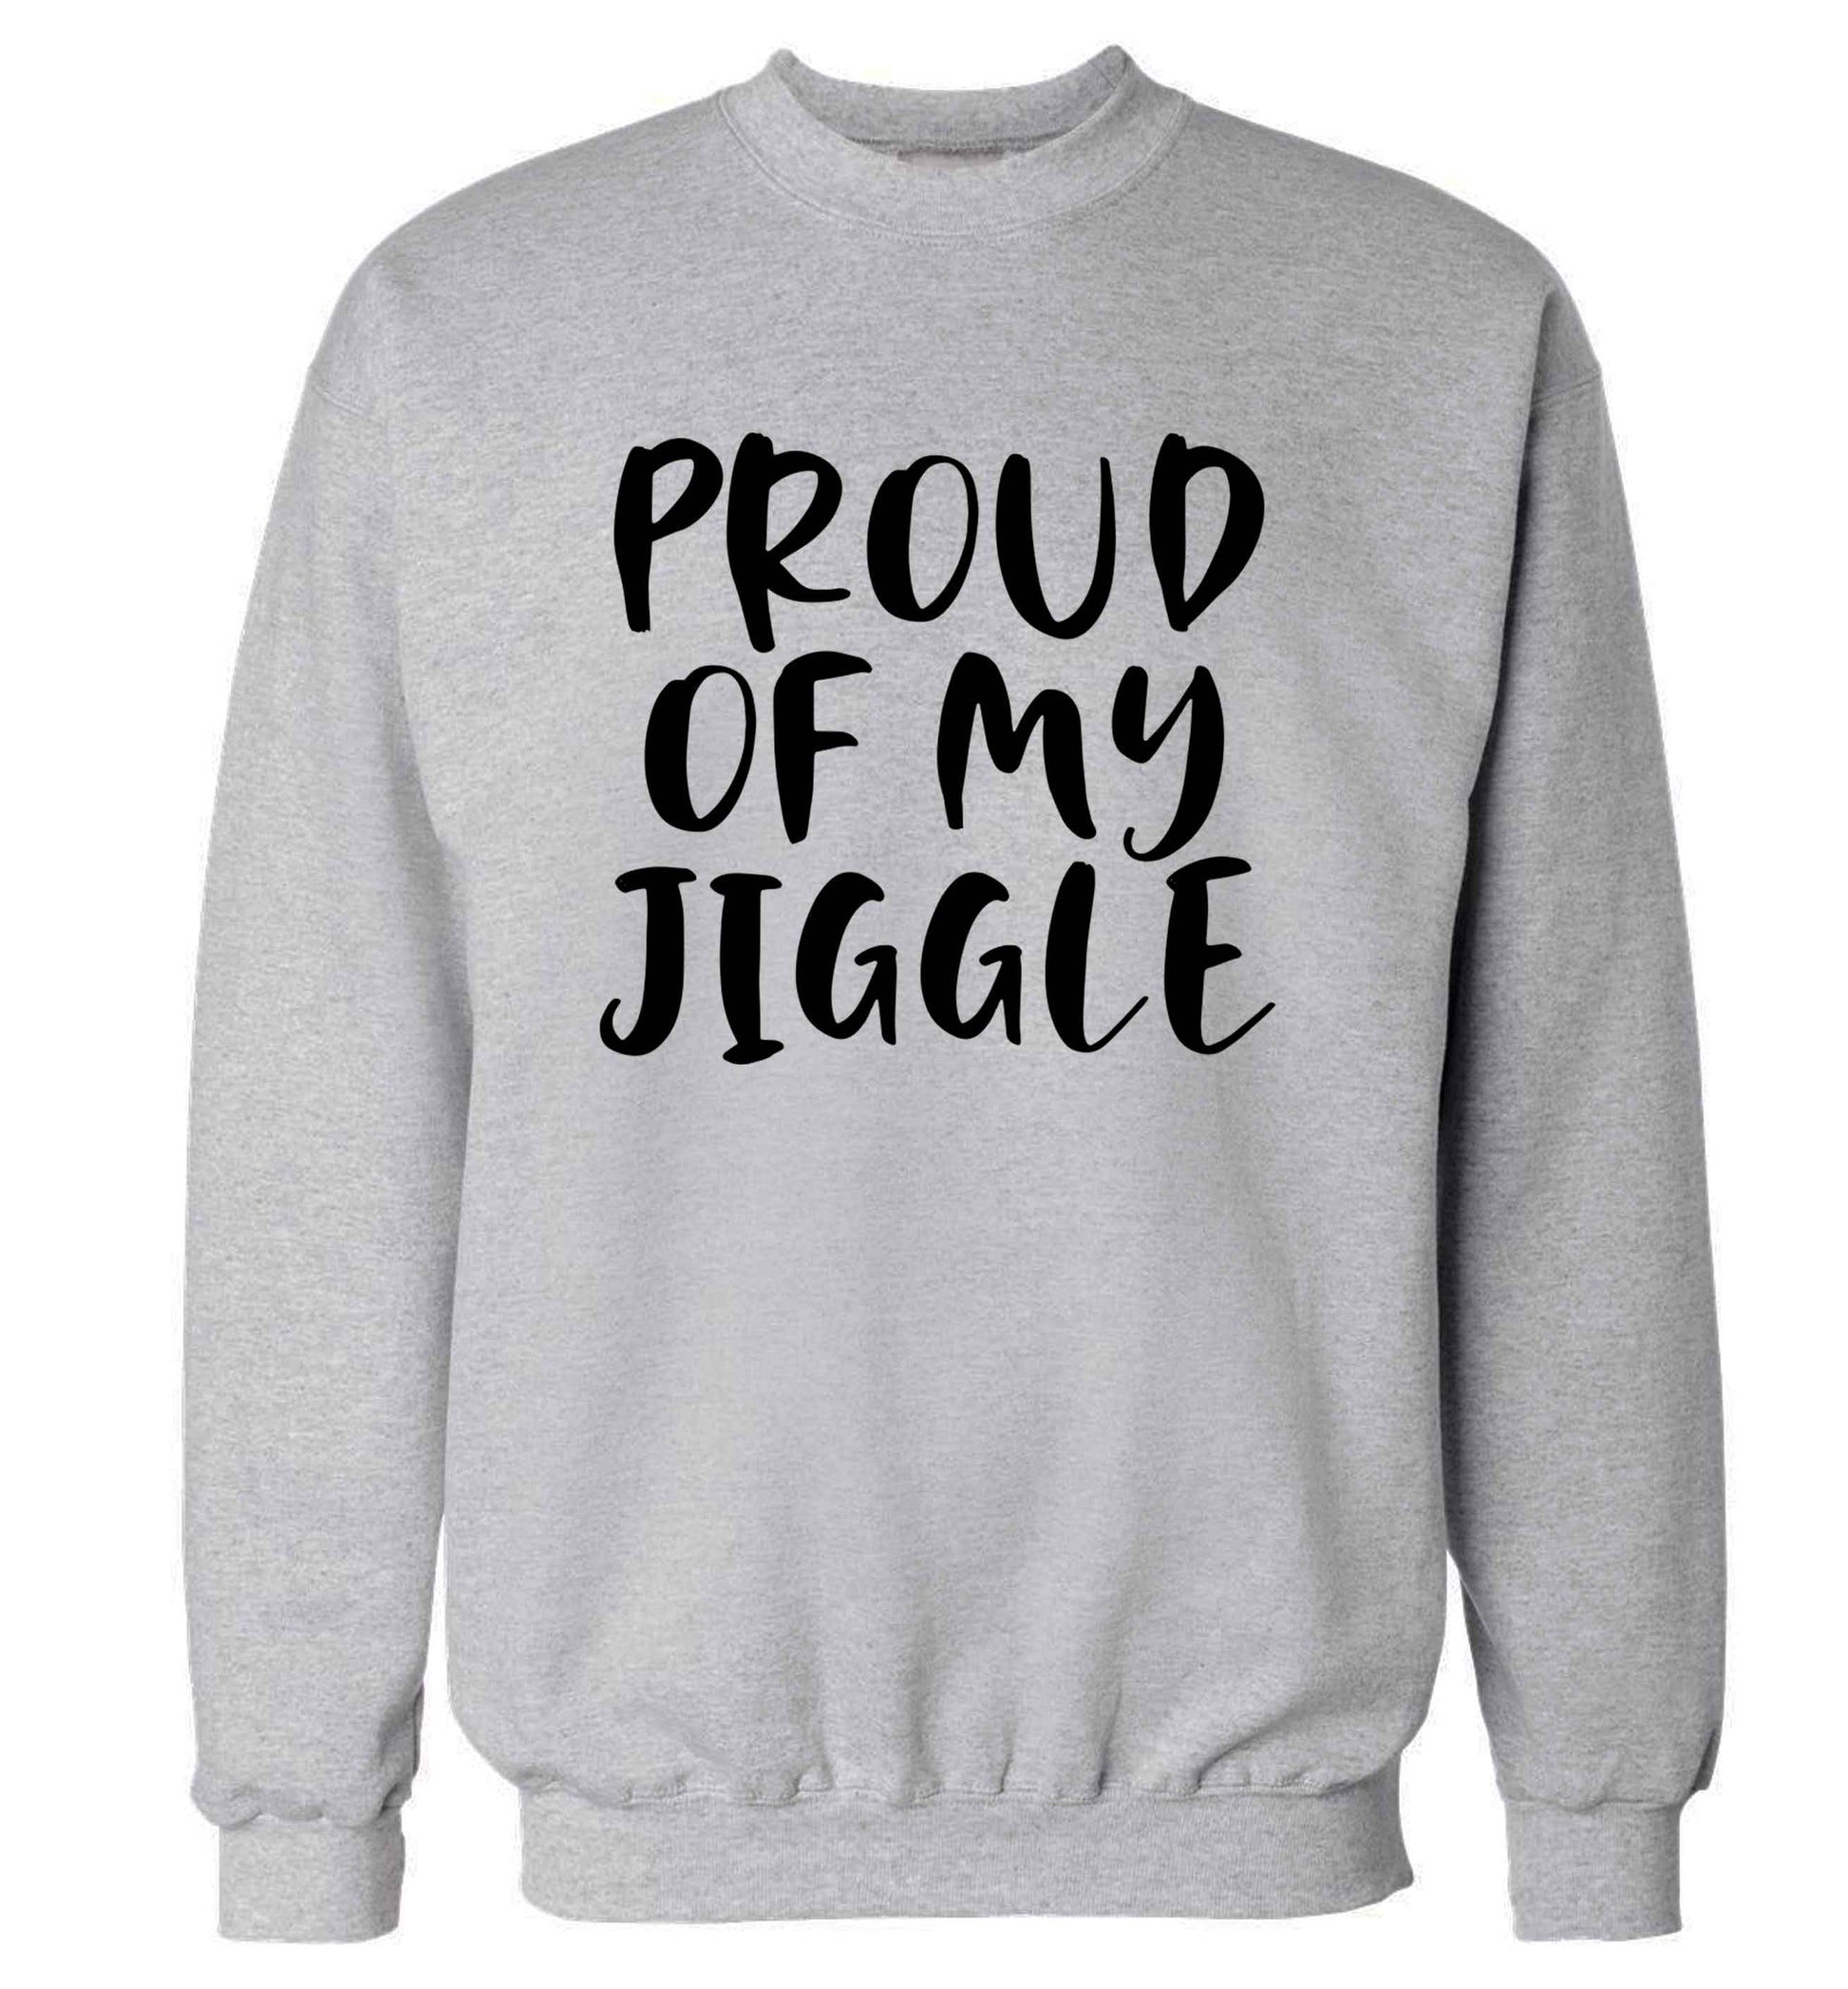 Proud of my jiggle adult's unisex grey sweater 2XL